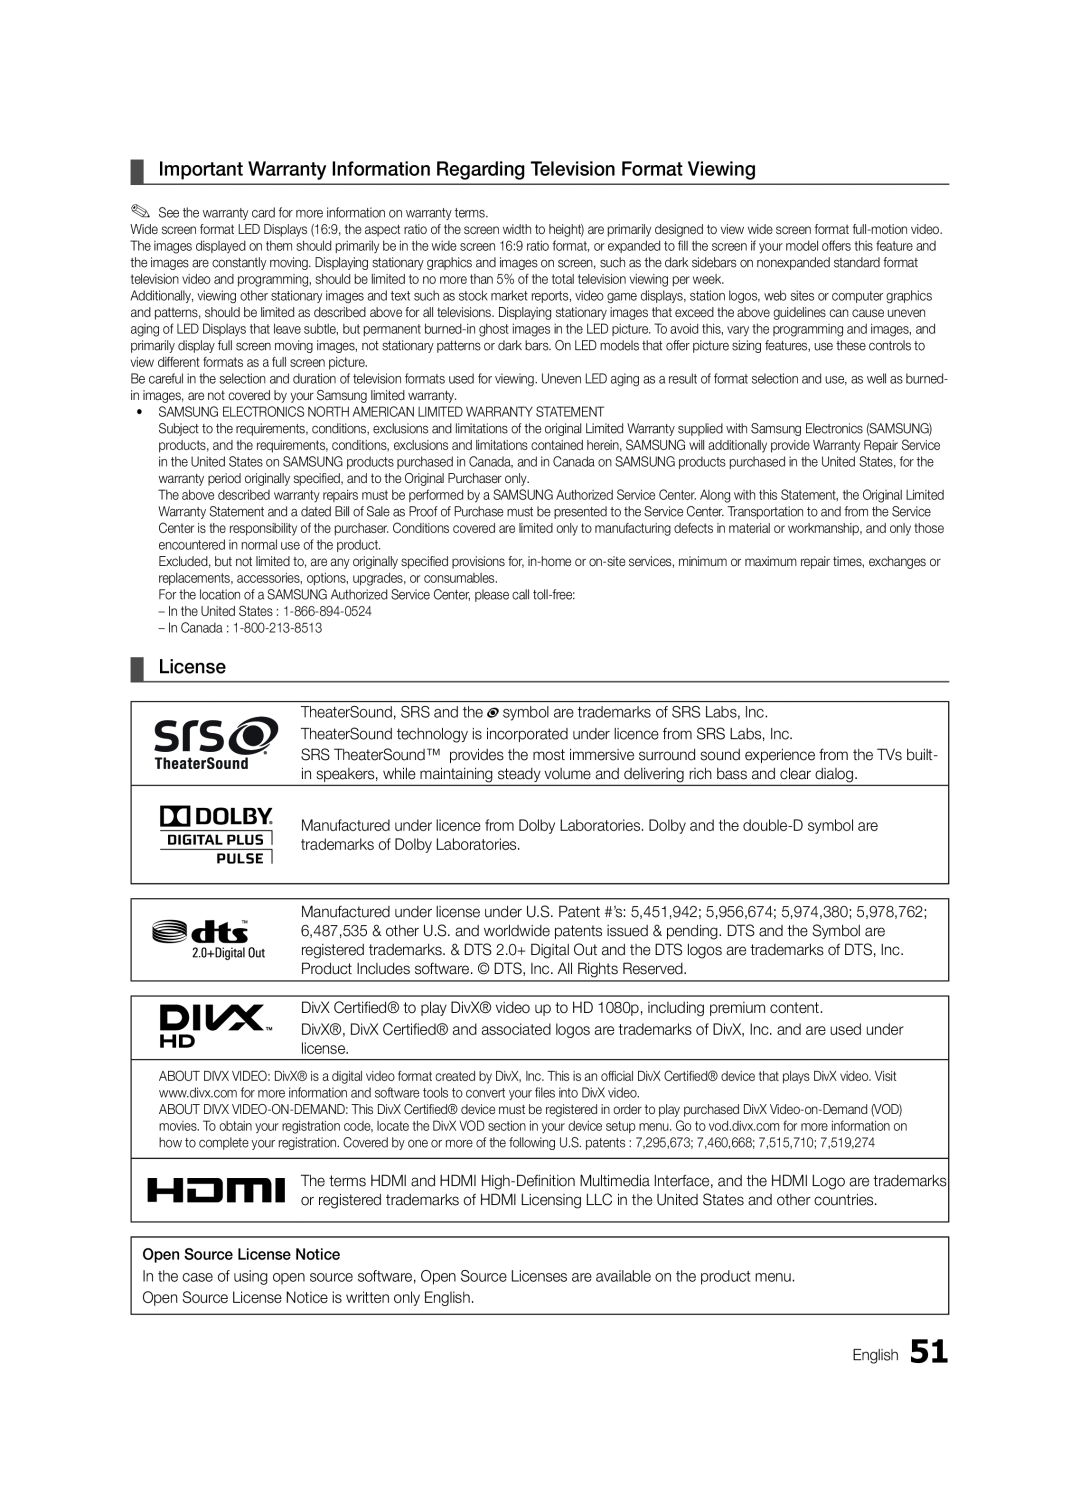 Samsung HG46NB890XFXZA, HG65NB890XFXZA Important Warranty Information Regarding Television Format Viewing, License 